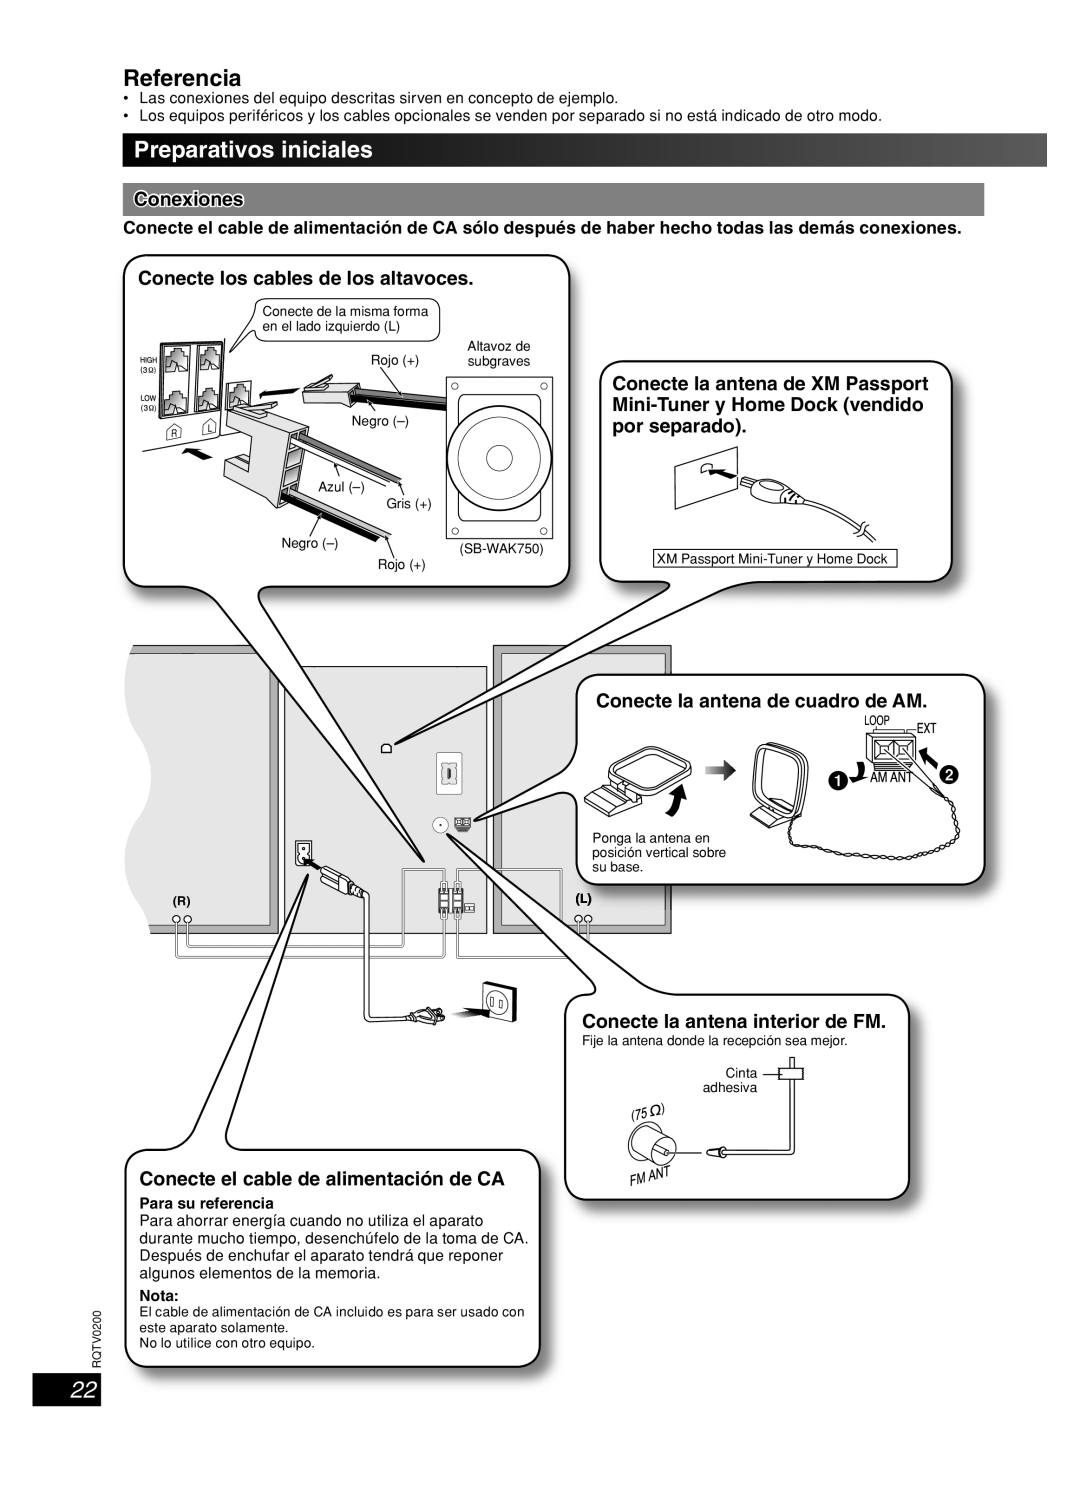 Panasonic Stereo System, 377 Referencia, Preparativos iniciales, Français, Conexiones, Lang - Español, English, Dansk 